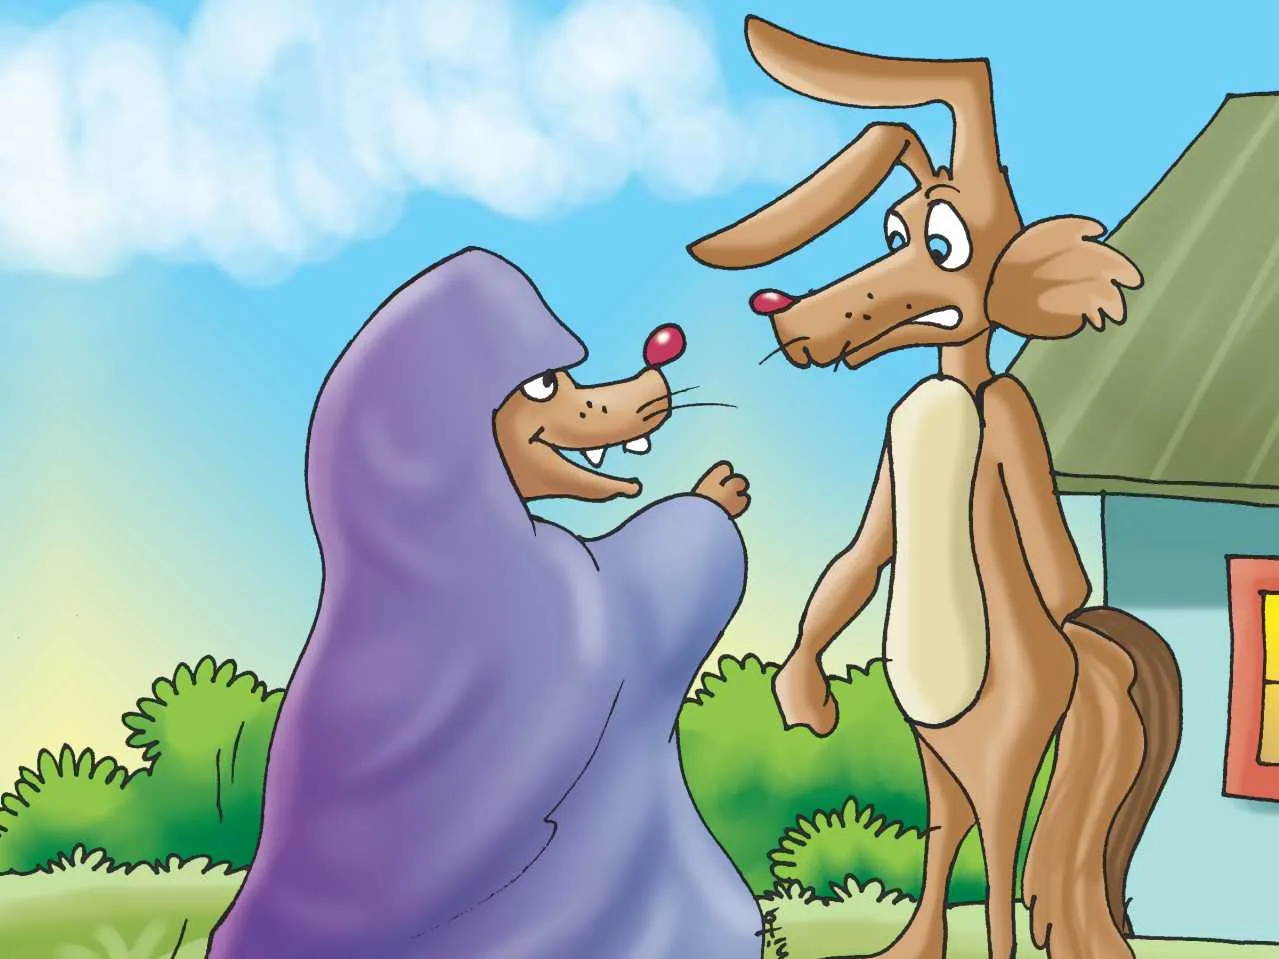 Two jackals cartoon image